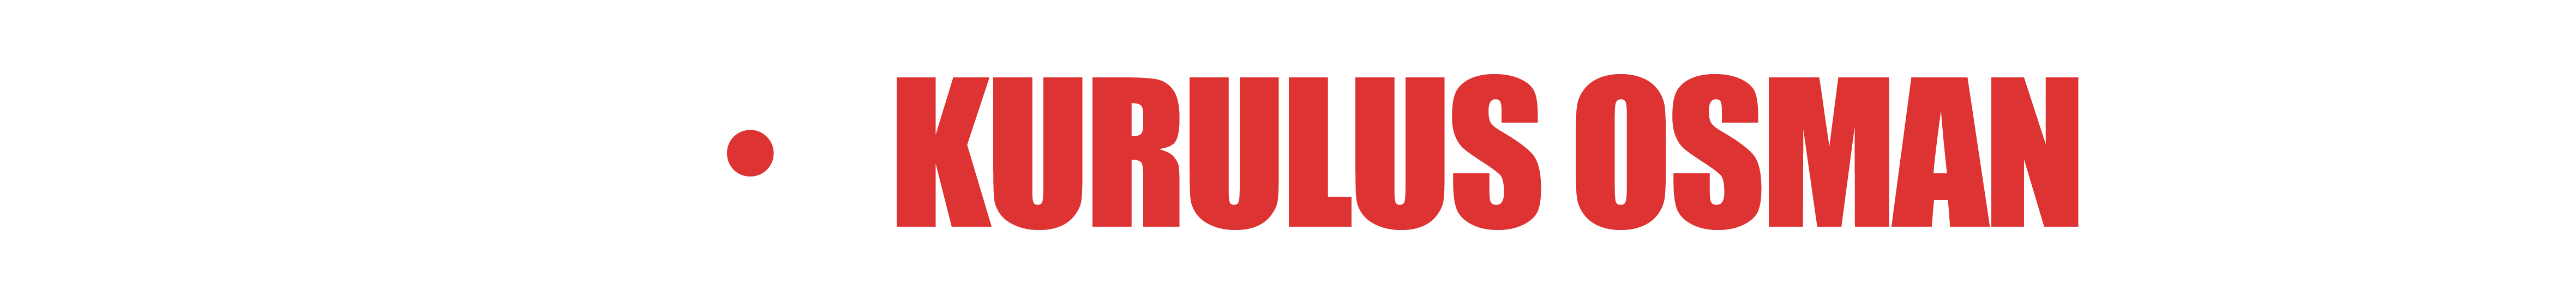 Kuruls Osman - Explore wide range turkish series in Urdu and English Subtitles like Kurulus Osman.co Season 6